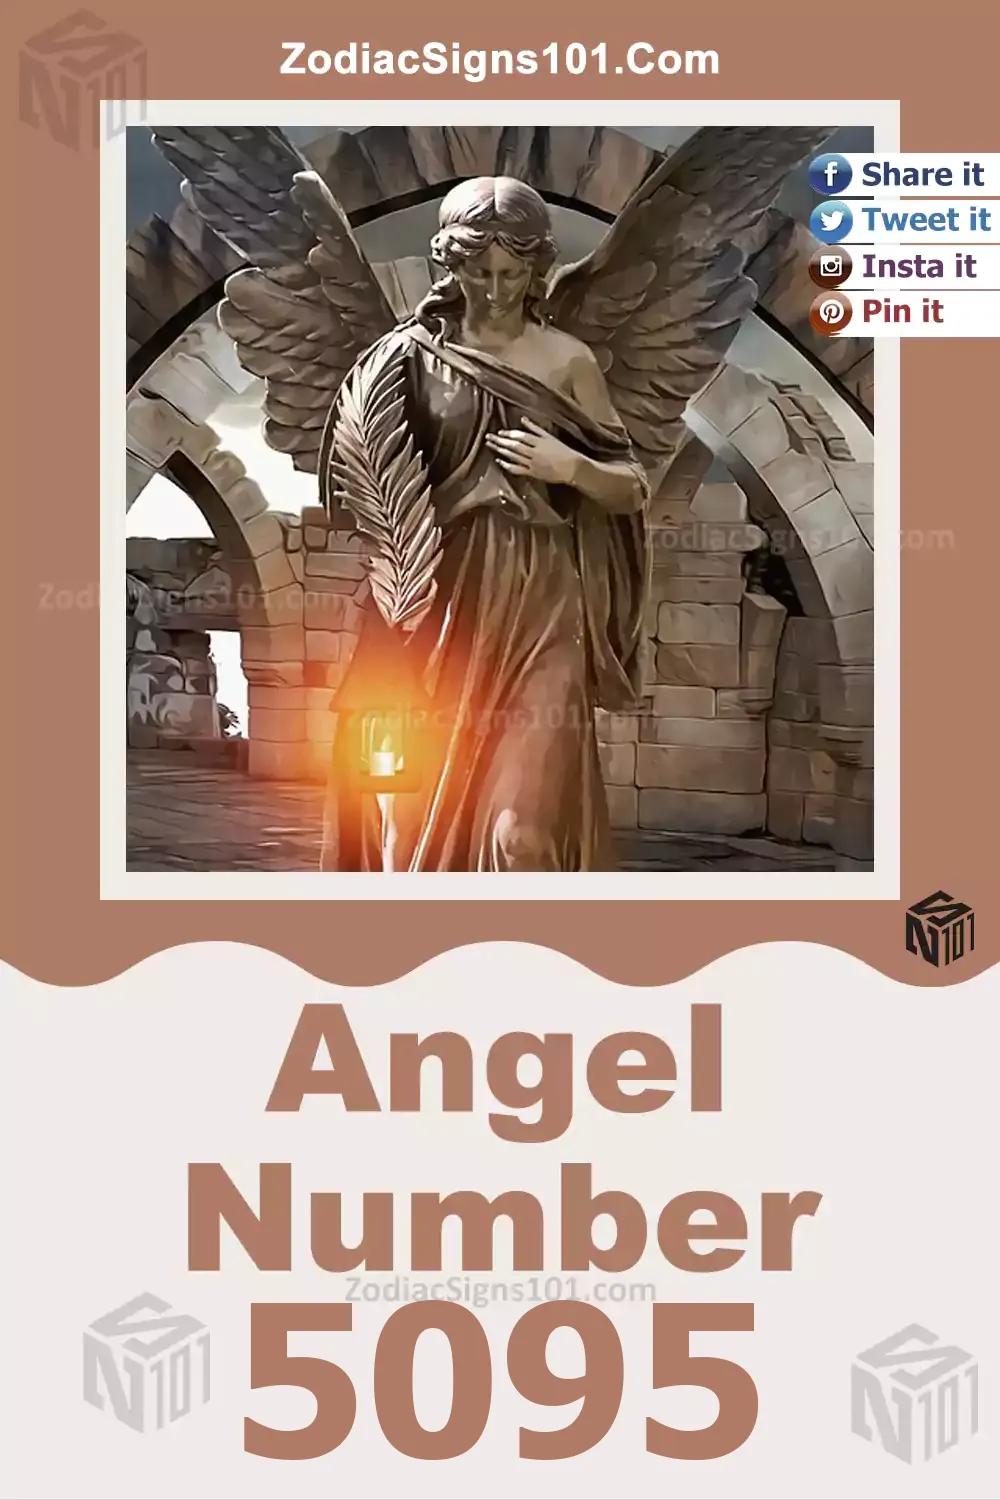 5095-Angel-Number-Meaning.jpg